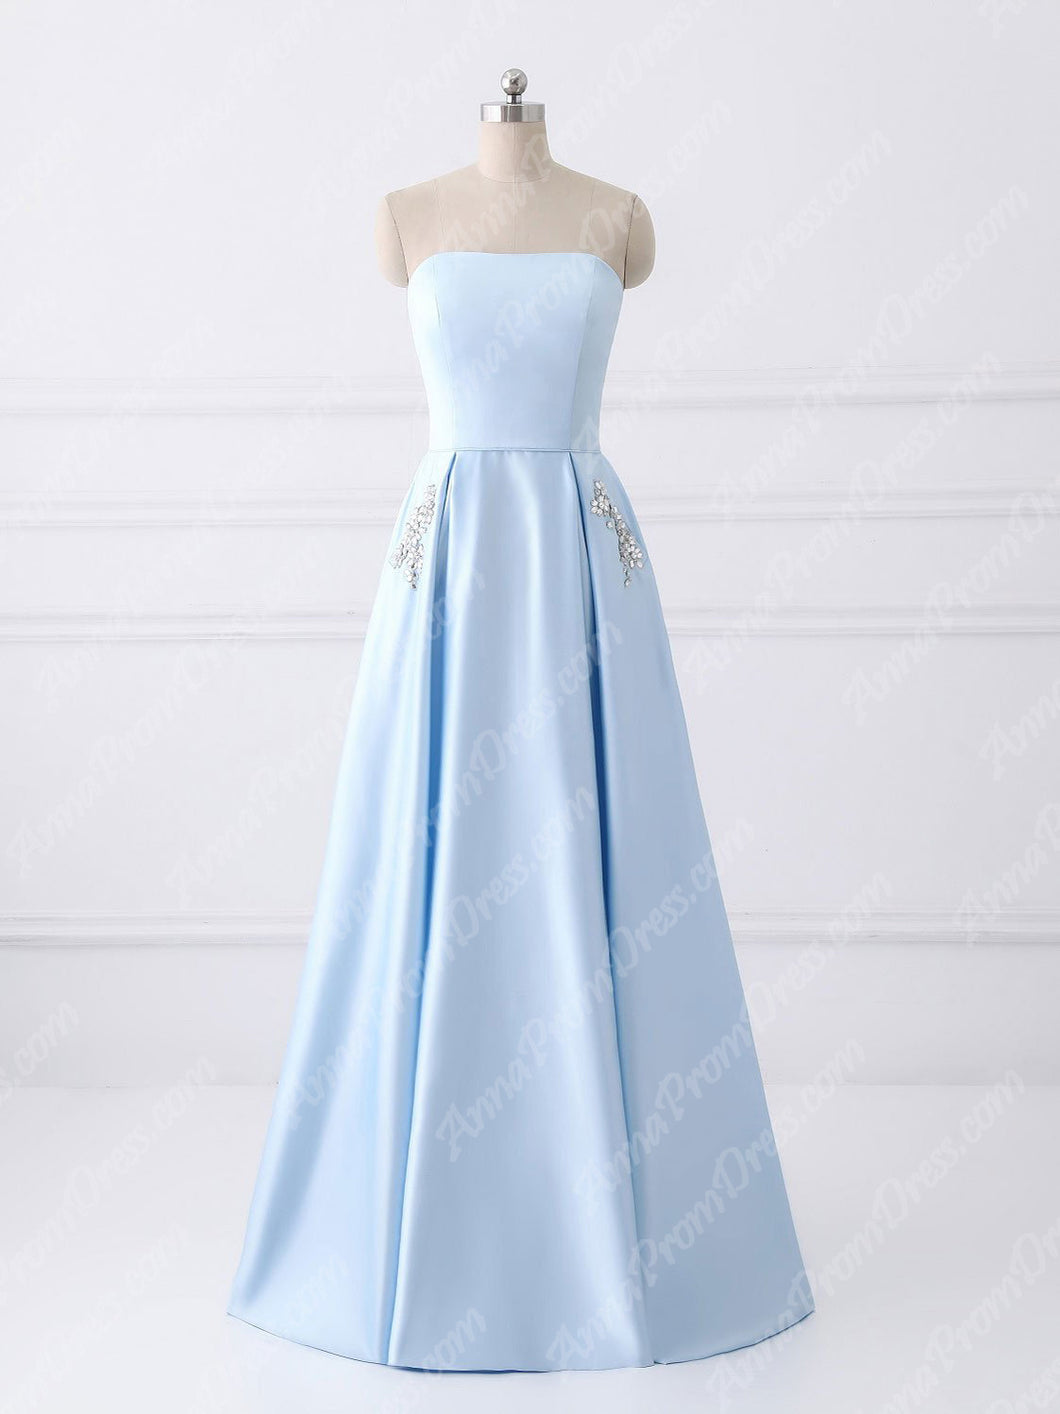 sky blue long prom dresses